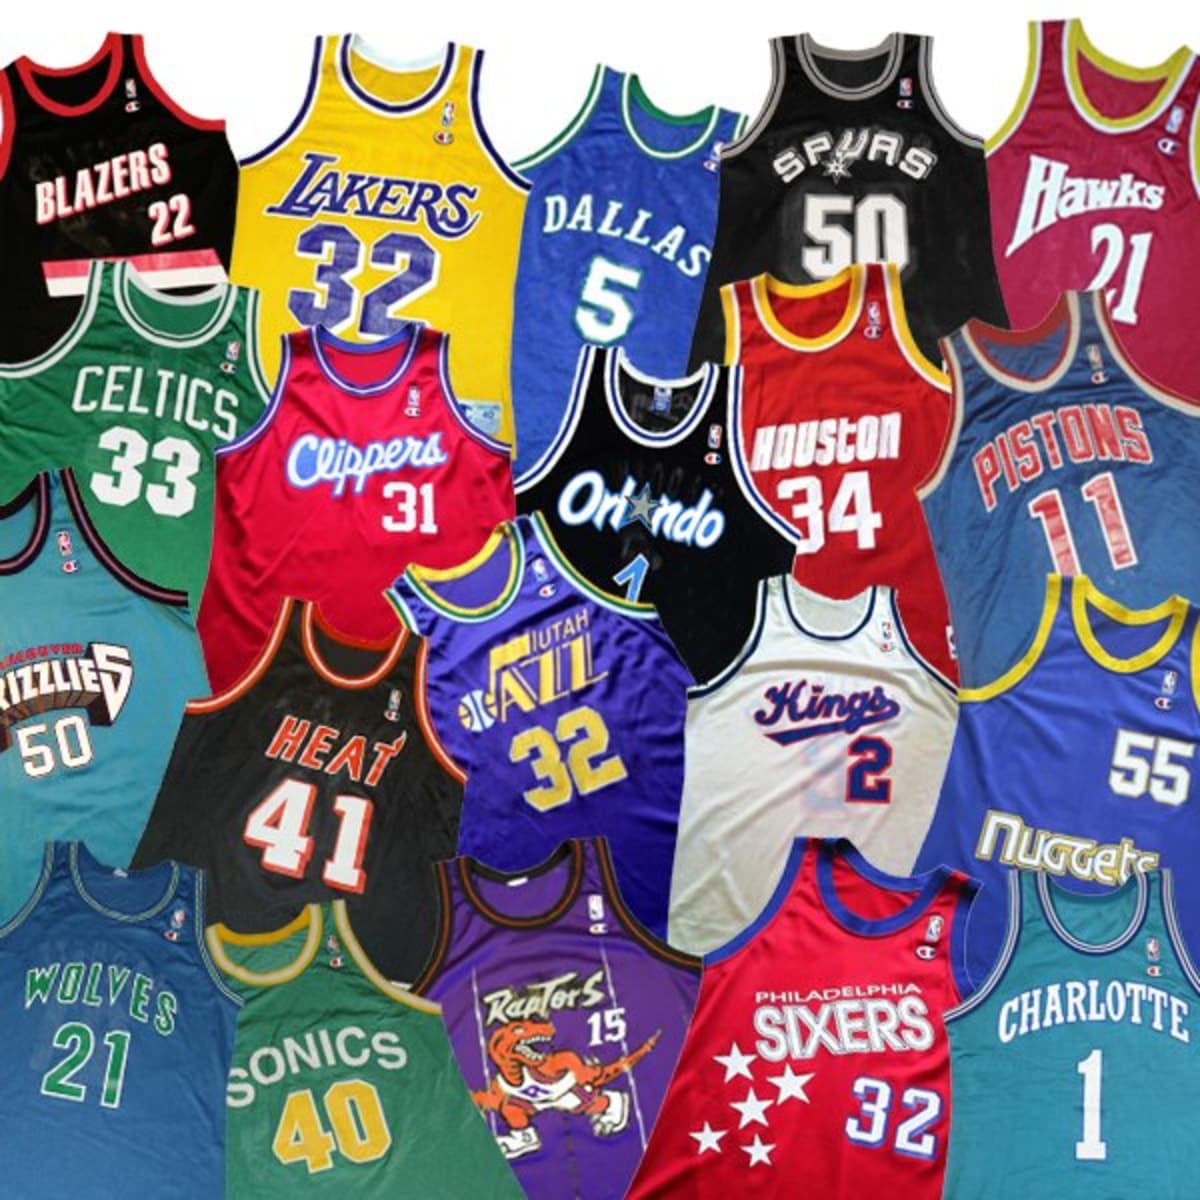 Top Selling NBA Jerseys: The NBA's Most Popular Jerseys Since 2001